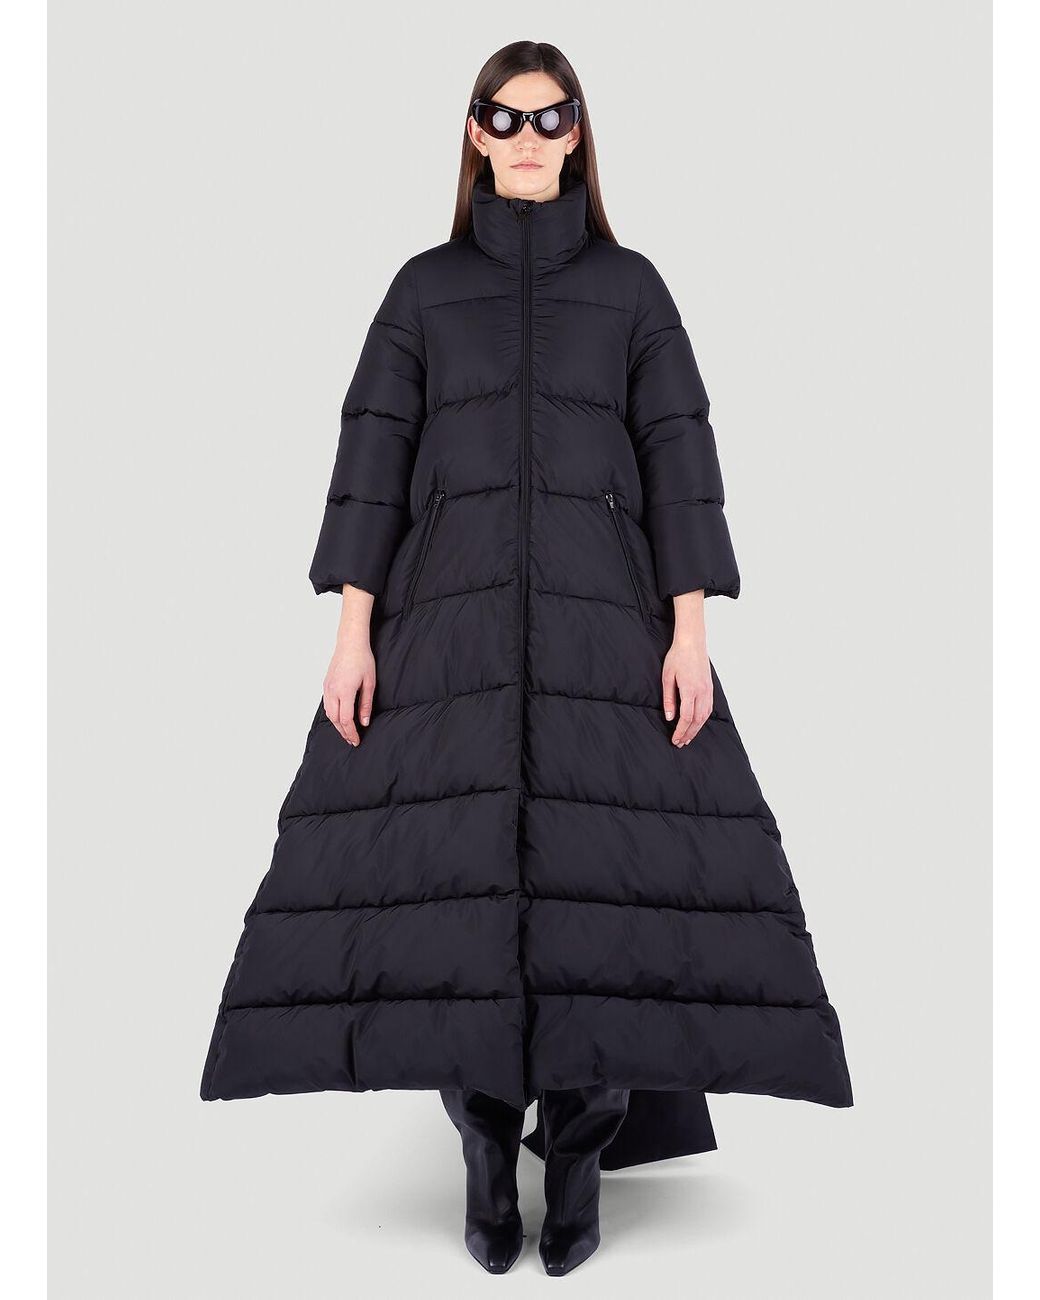 Balenciaga Synthetic Maxi Bow Puffer Coat in Black | Lyst Canada